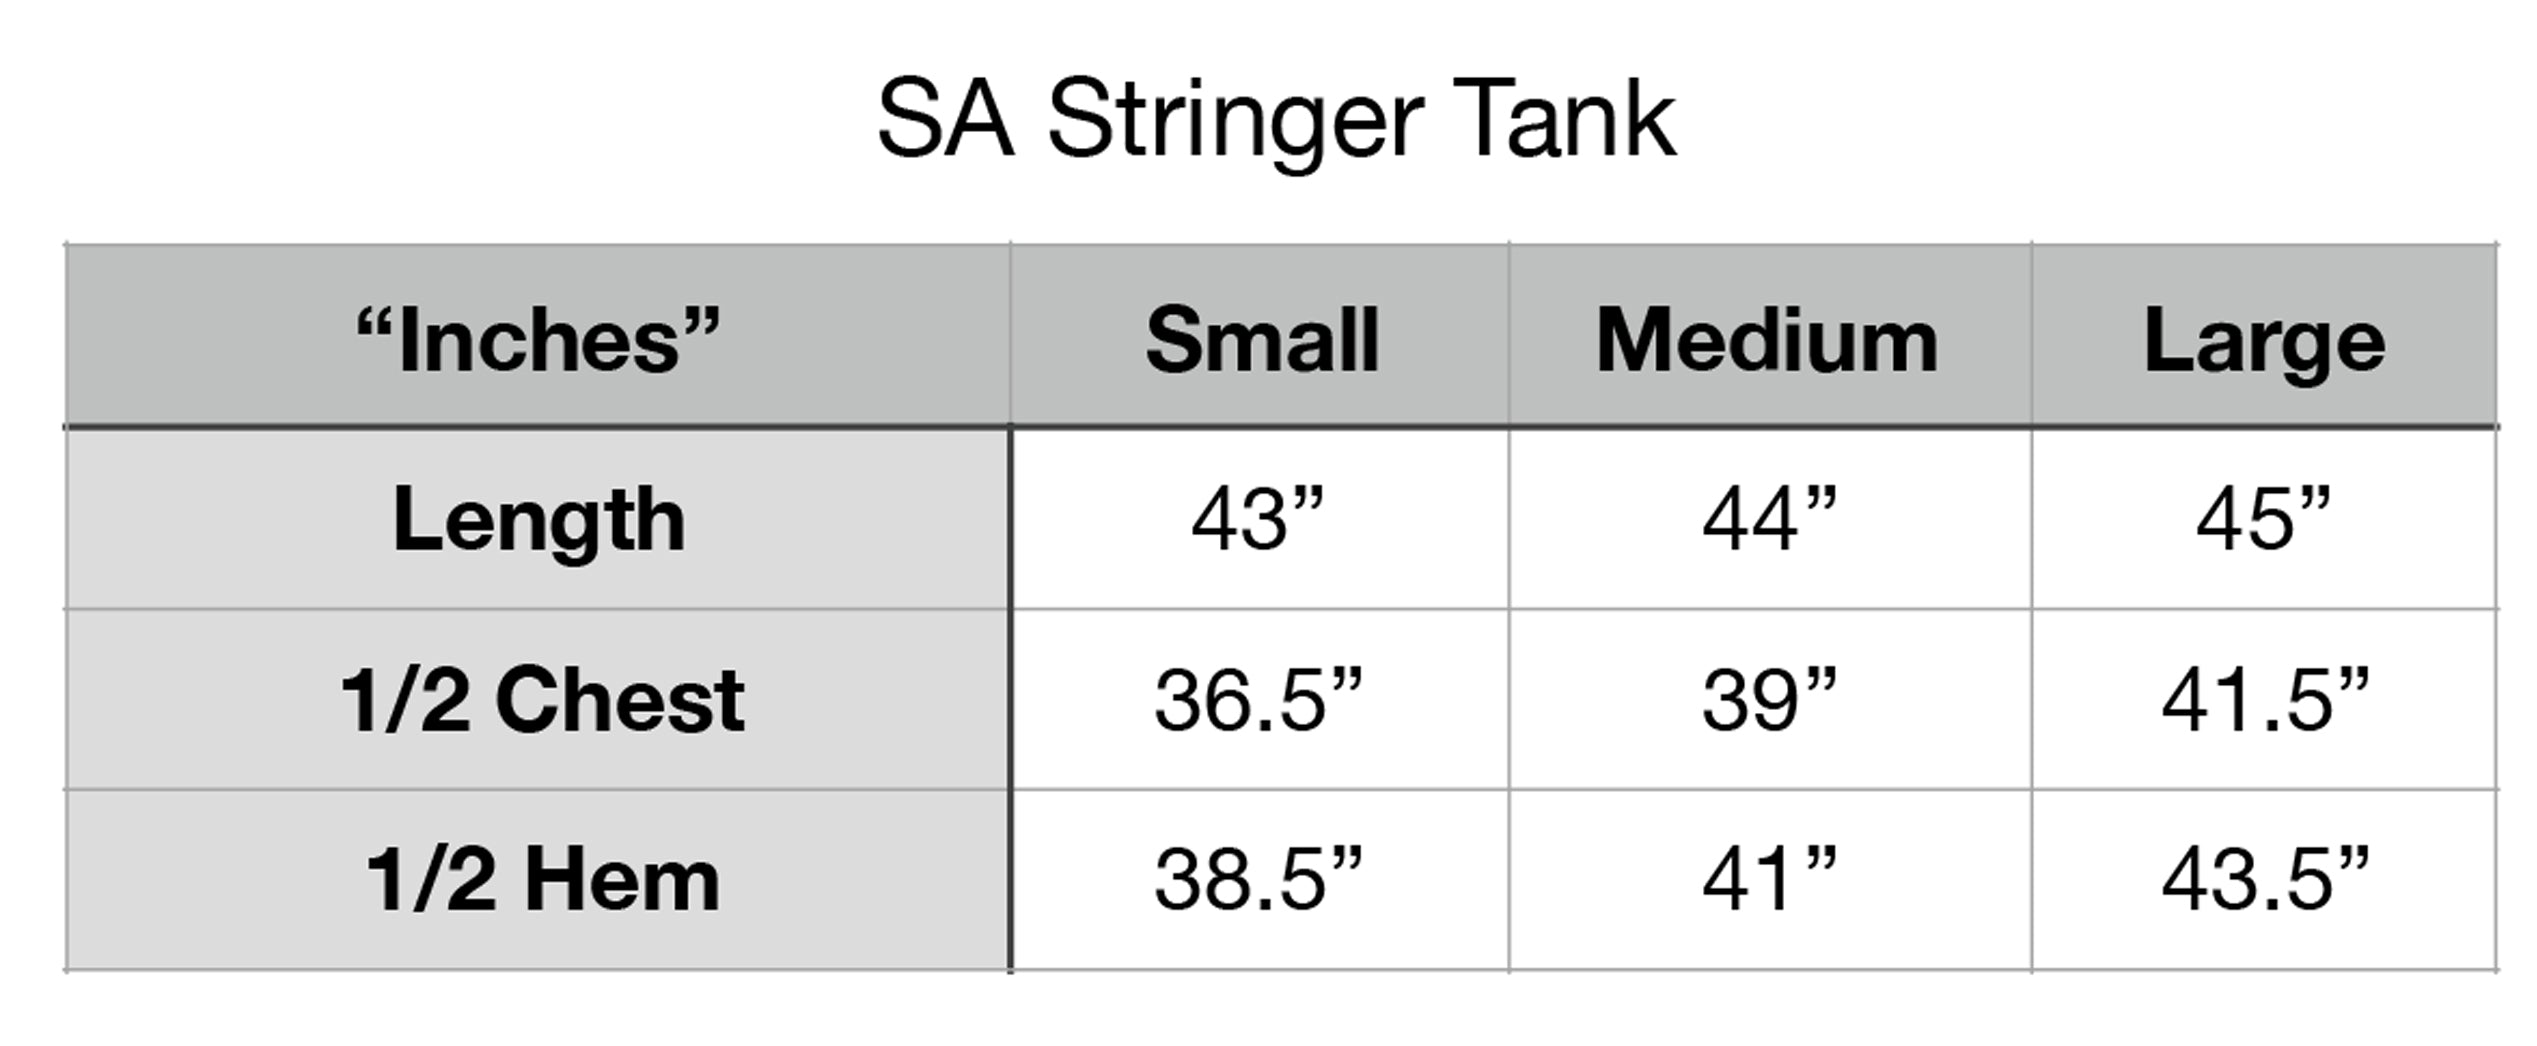 Exfil Stringer Tank